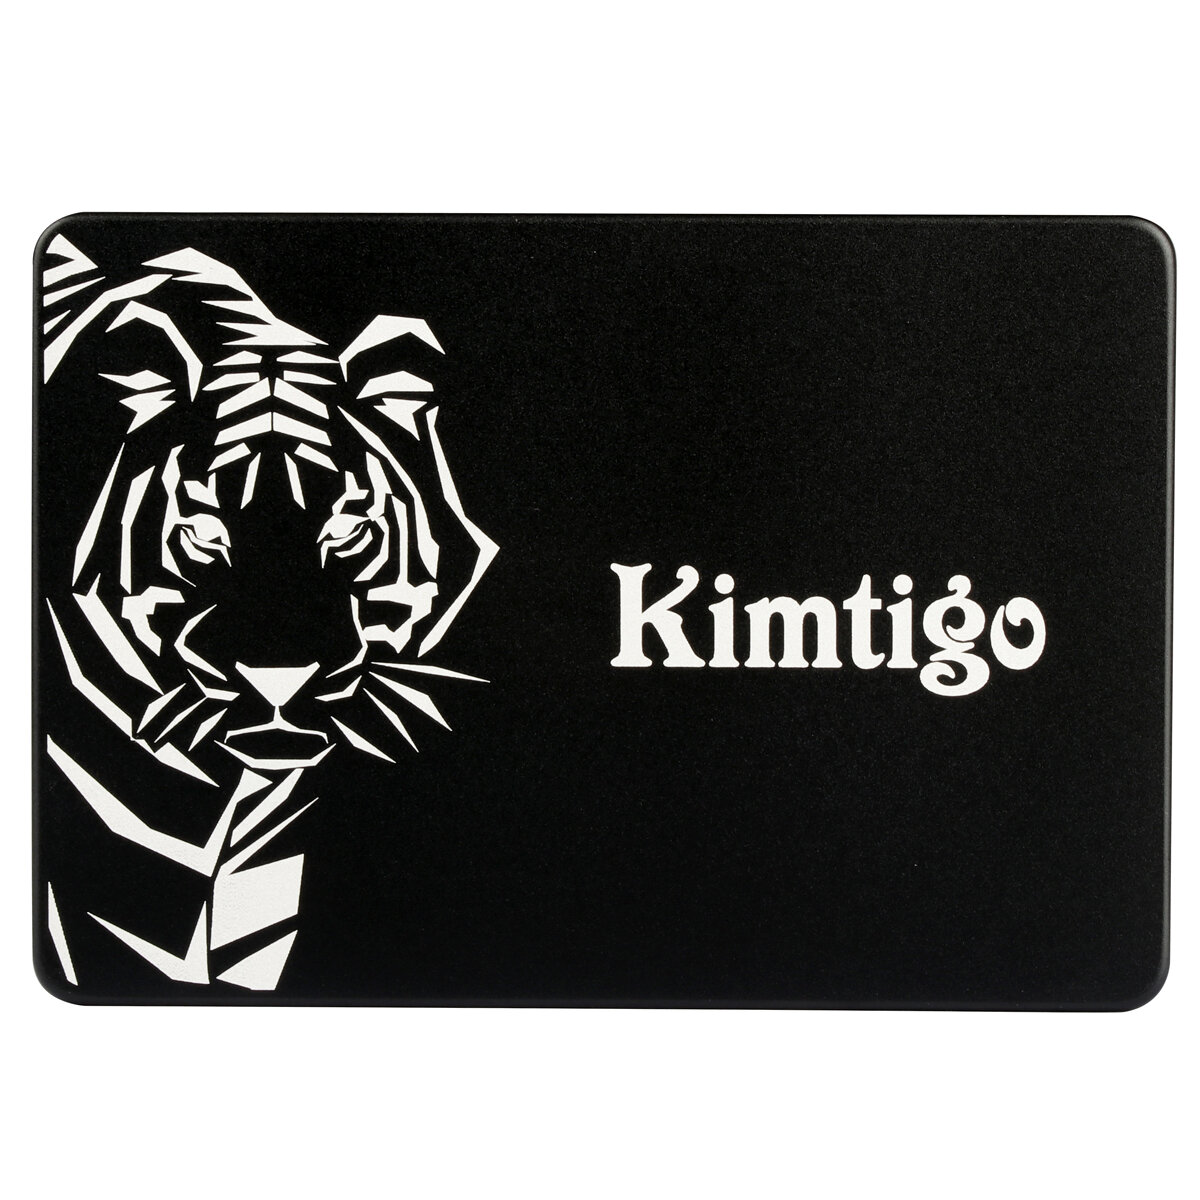 Kimtigo KTA-320 2.5 inch SATA 3 Solid State Drives 128GB 256GB 512GB 1T Hard Disk Up to Above 500MB/